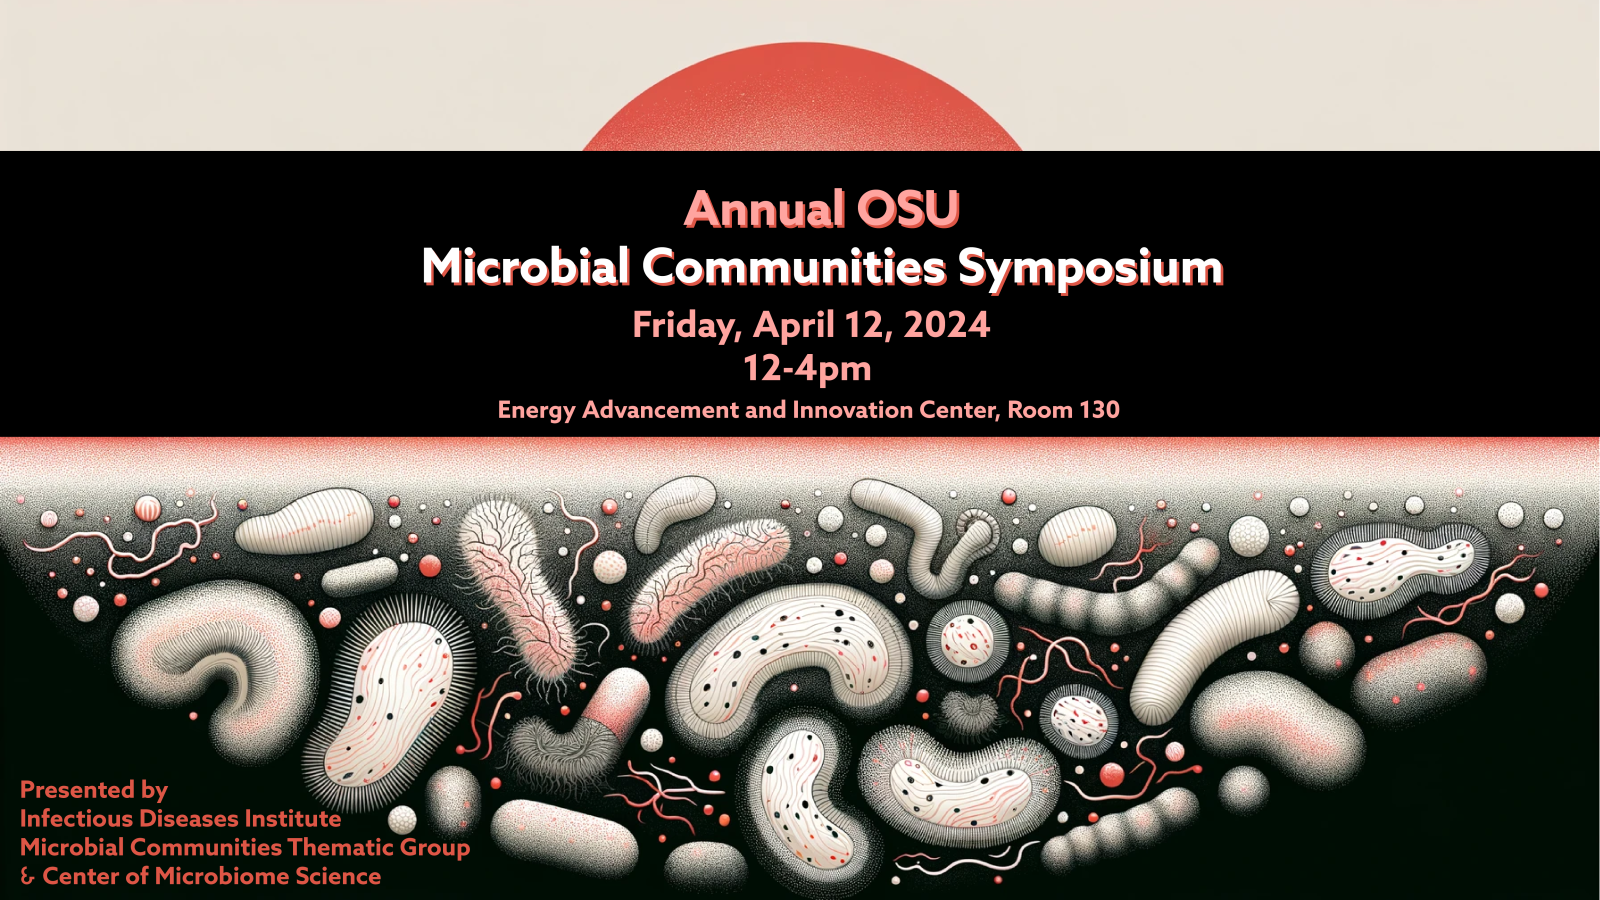 Annual OSU Microbial Communities Symposium April 12, 12-4pm